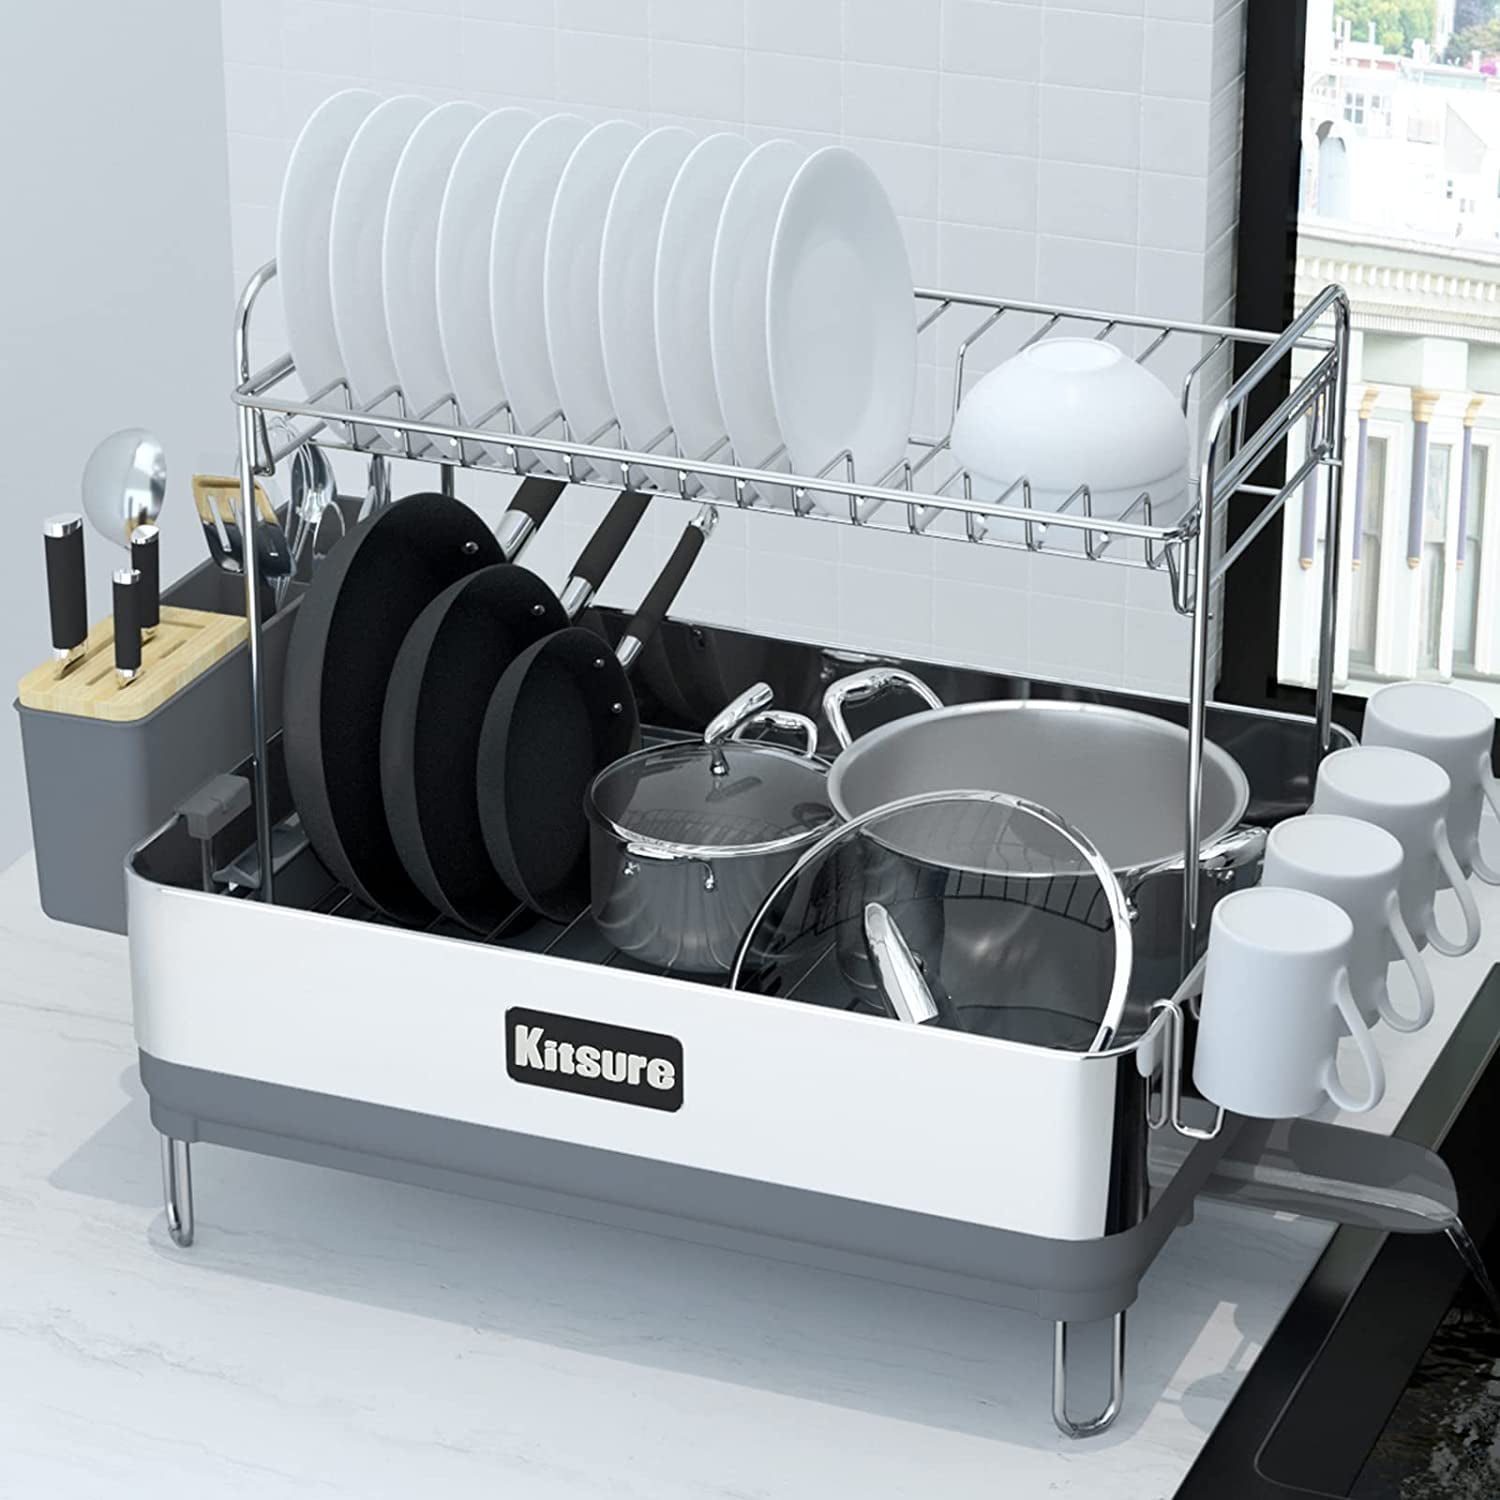 Kitsure Dish Rack, 2-Tier Dish Drying Rack with Large Capacity